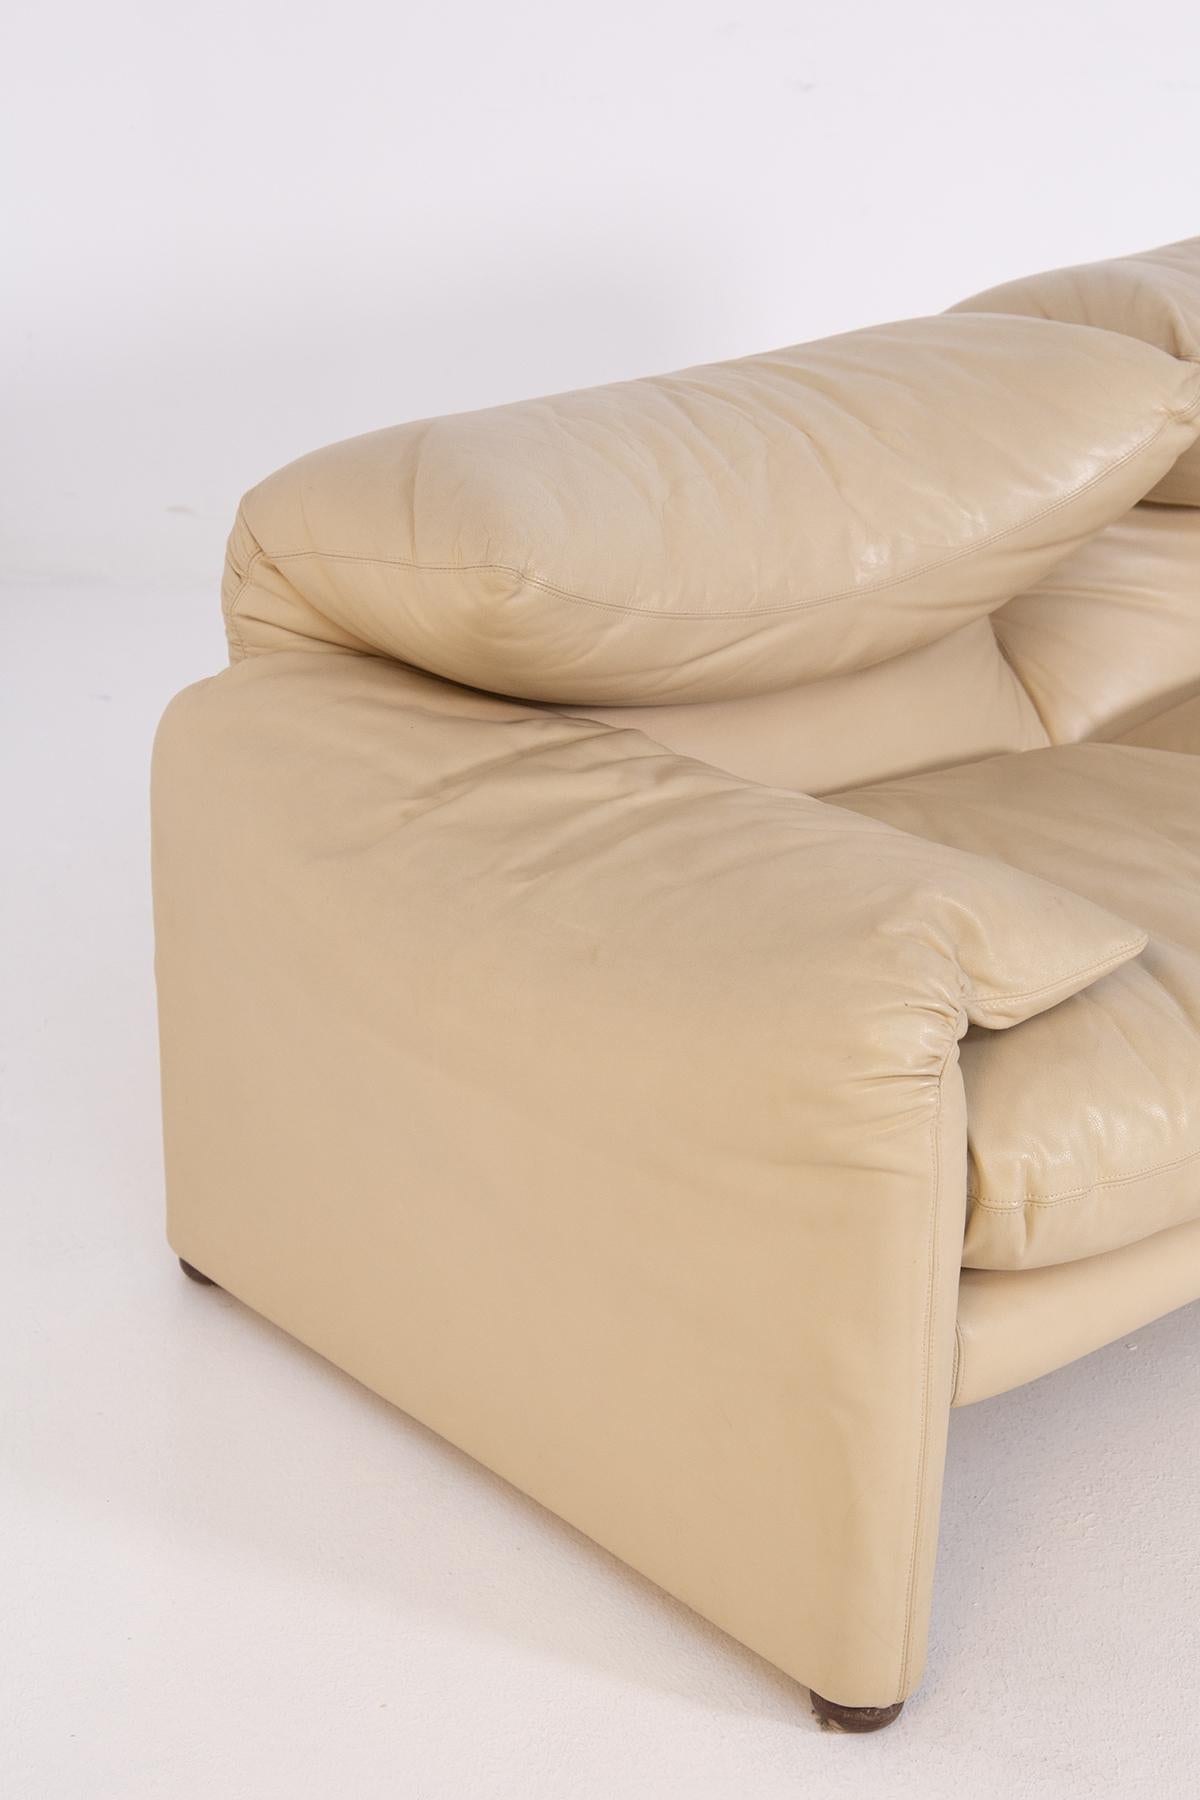 Vico Magistretti Italian Sofa in Leather for Cassina, First Edition In Good Condition In Milano, IT